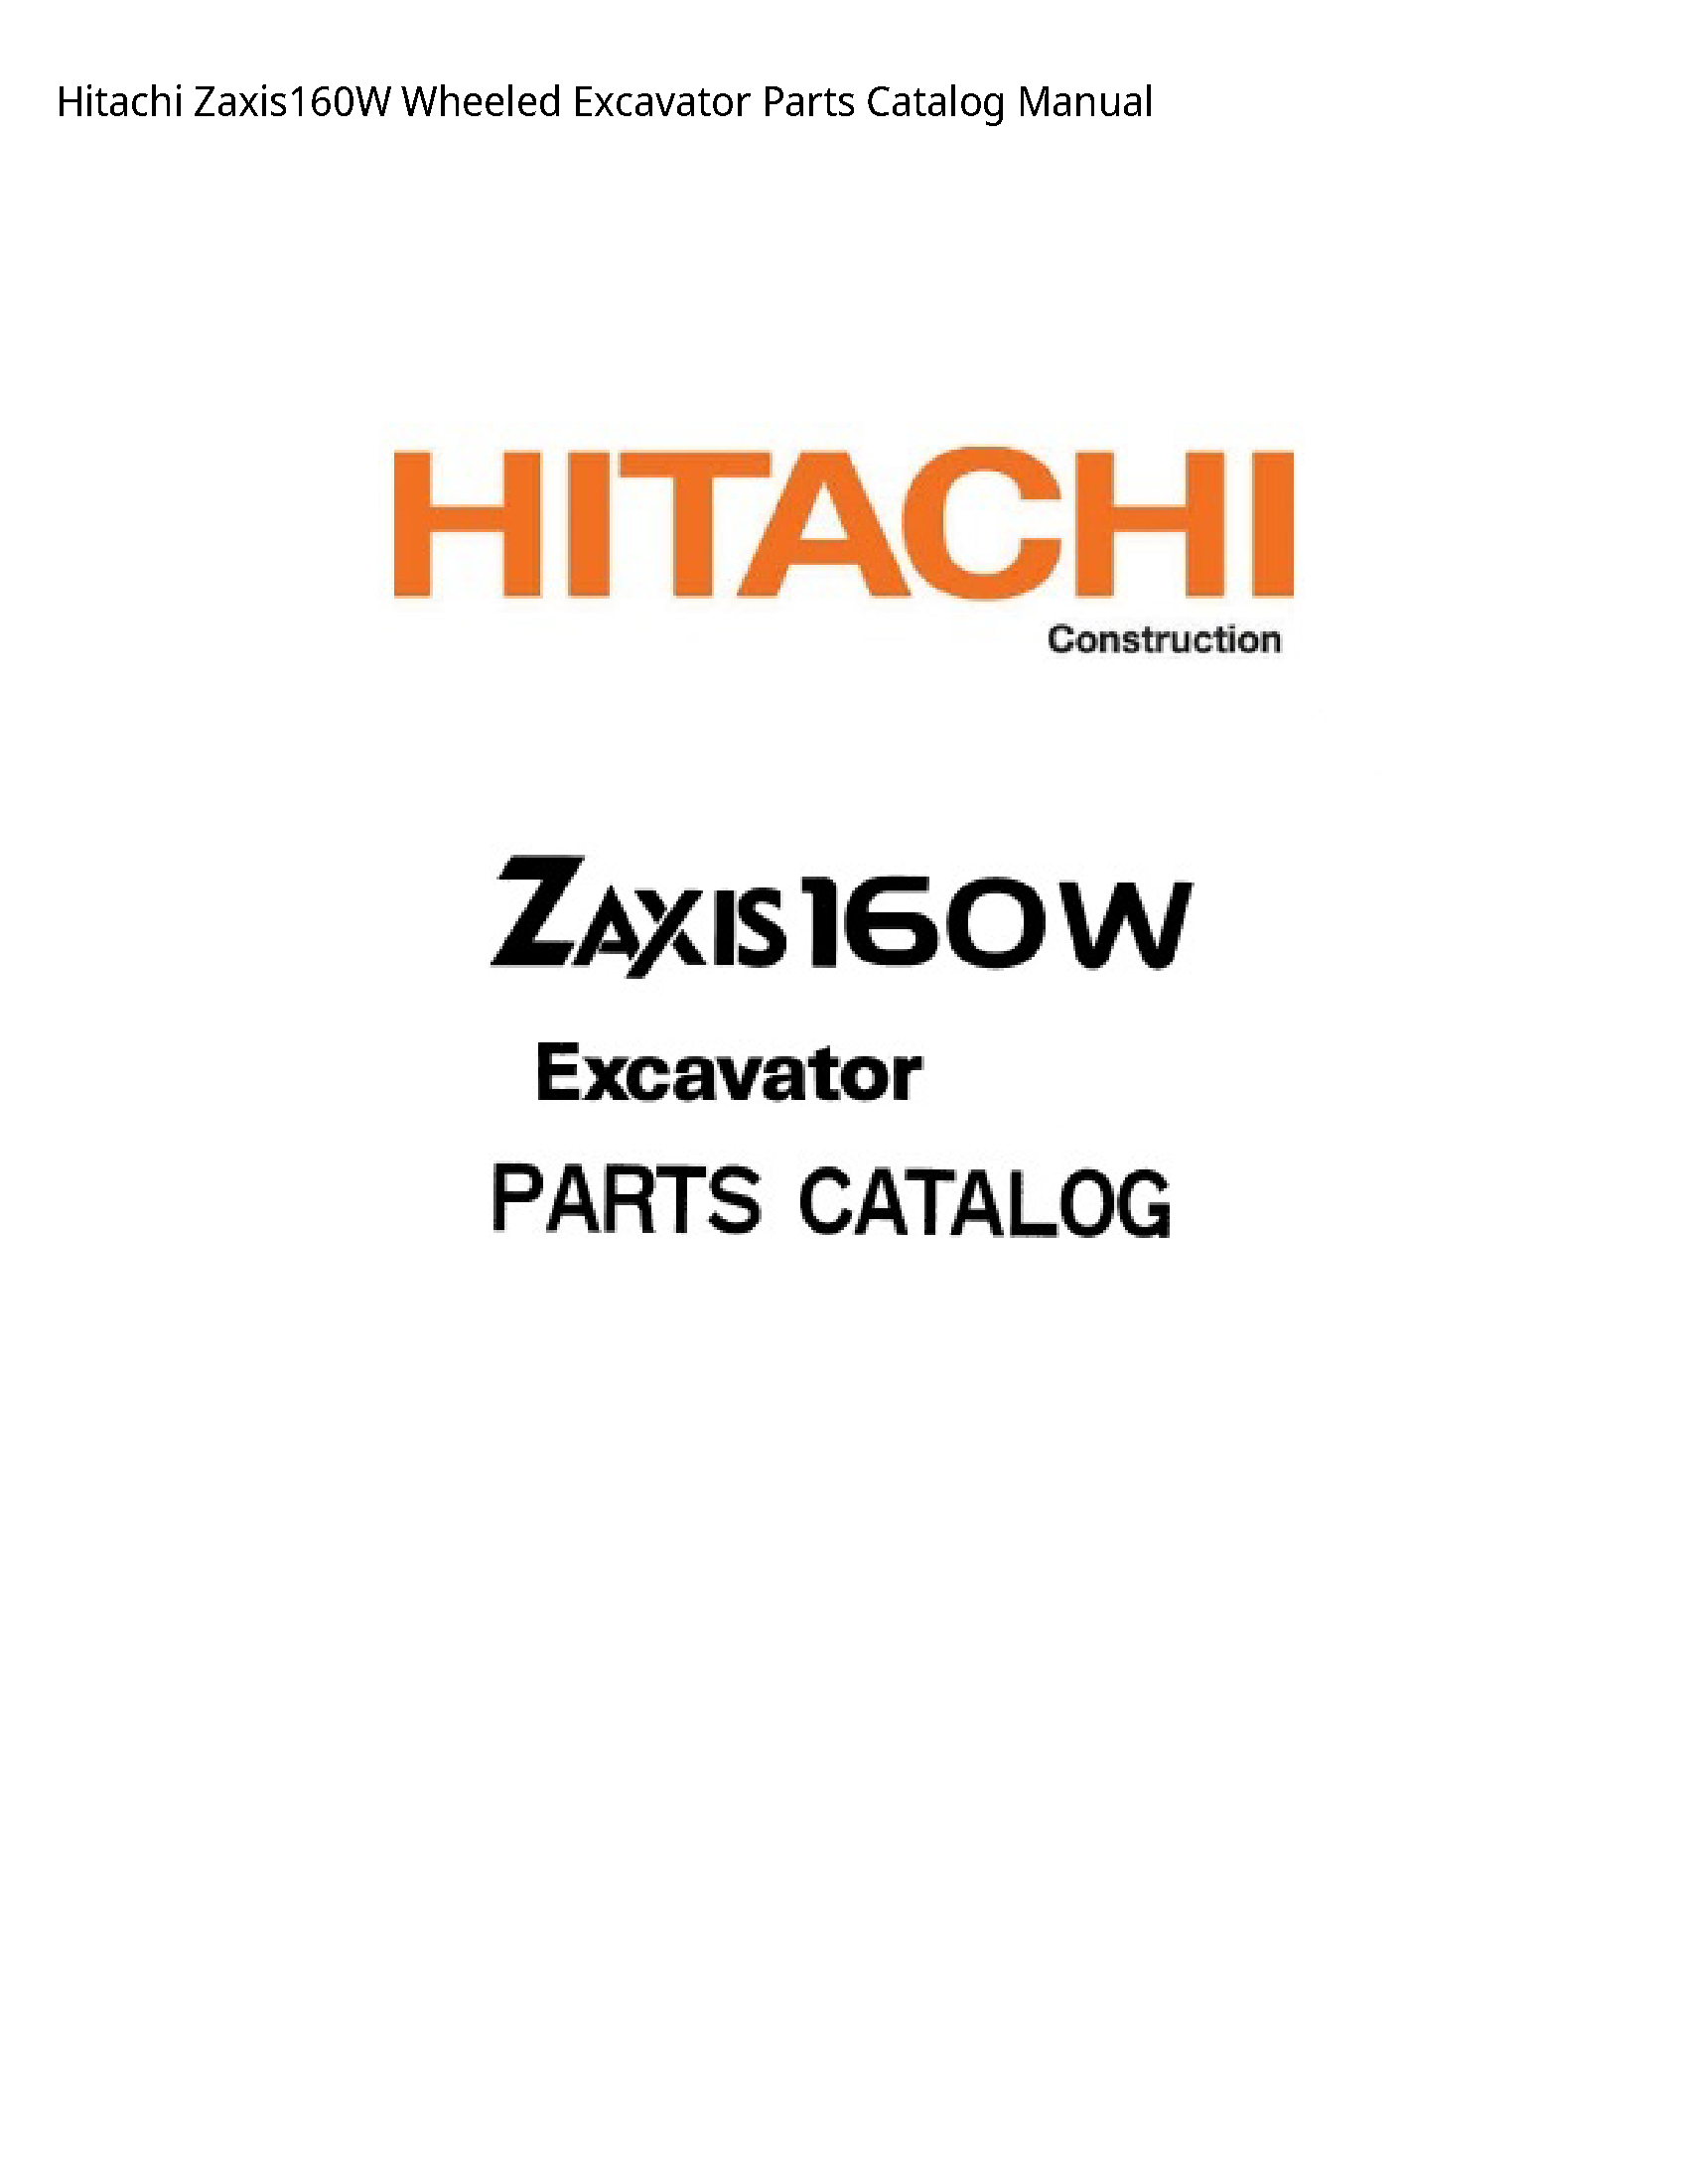 Hitachi Zaxis160W Wheeled Excavator Parts Catalog manual